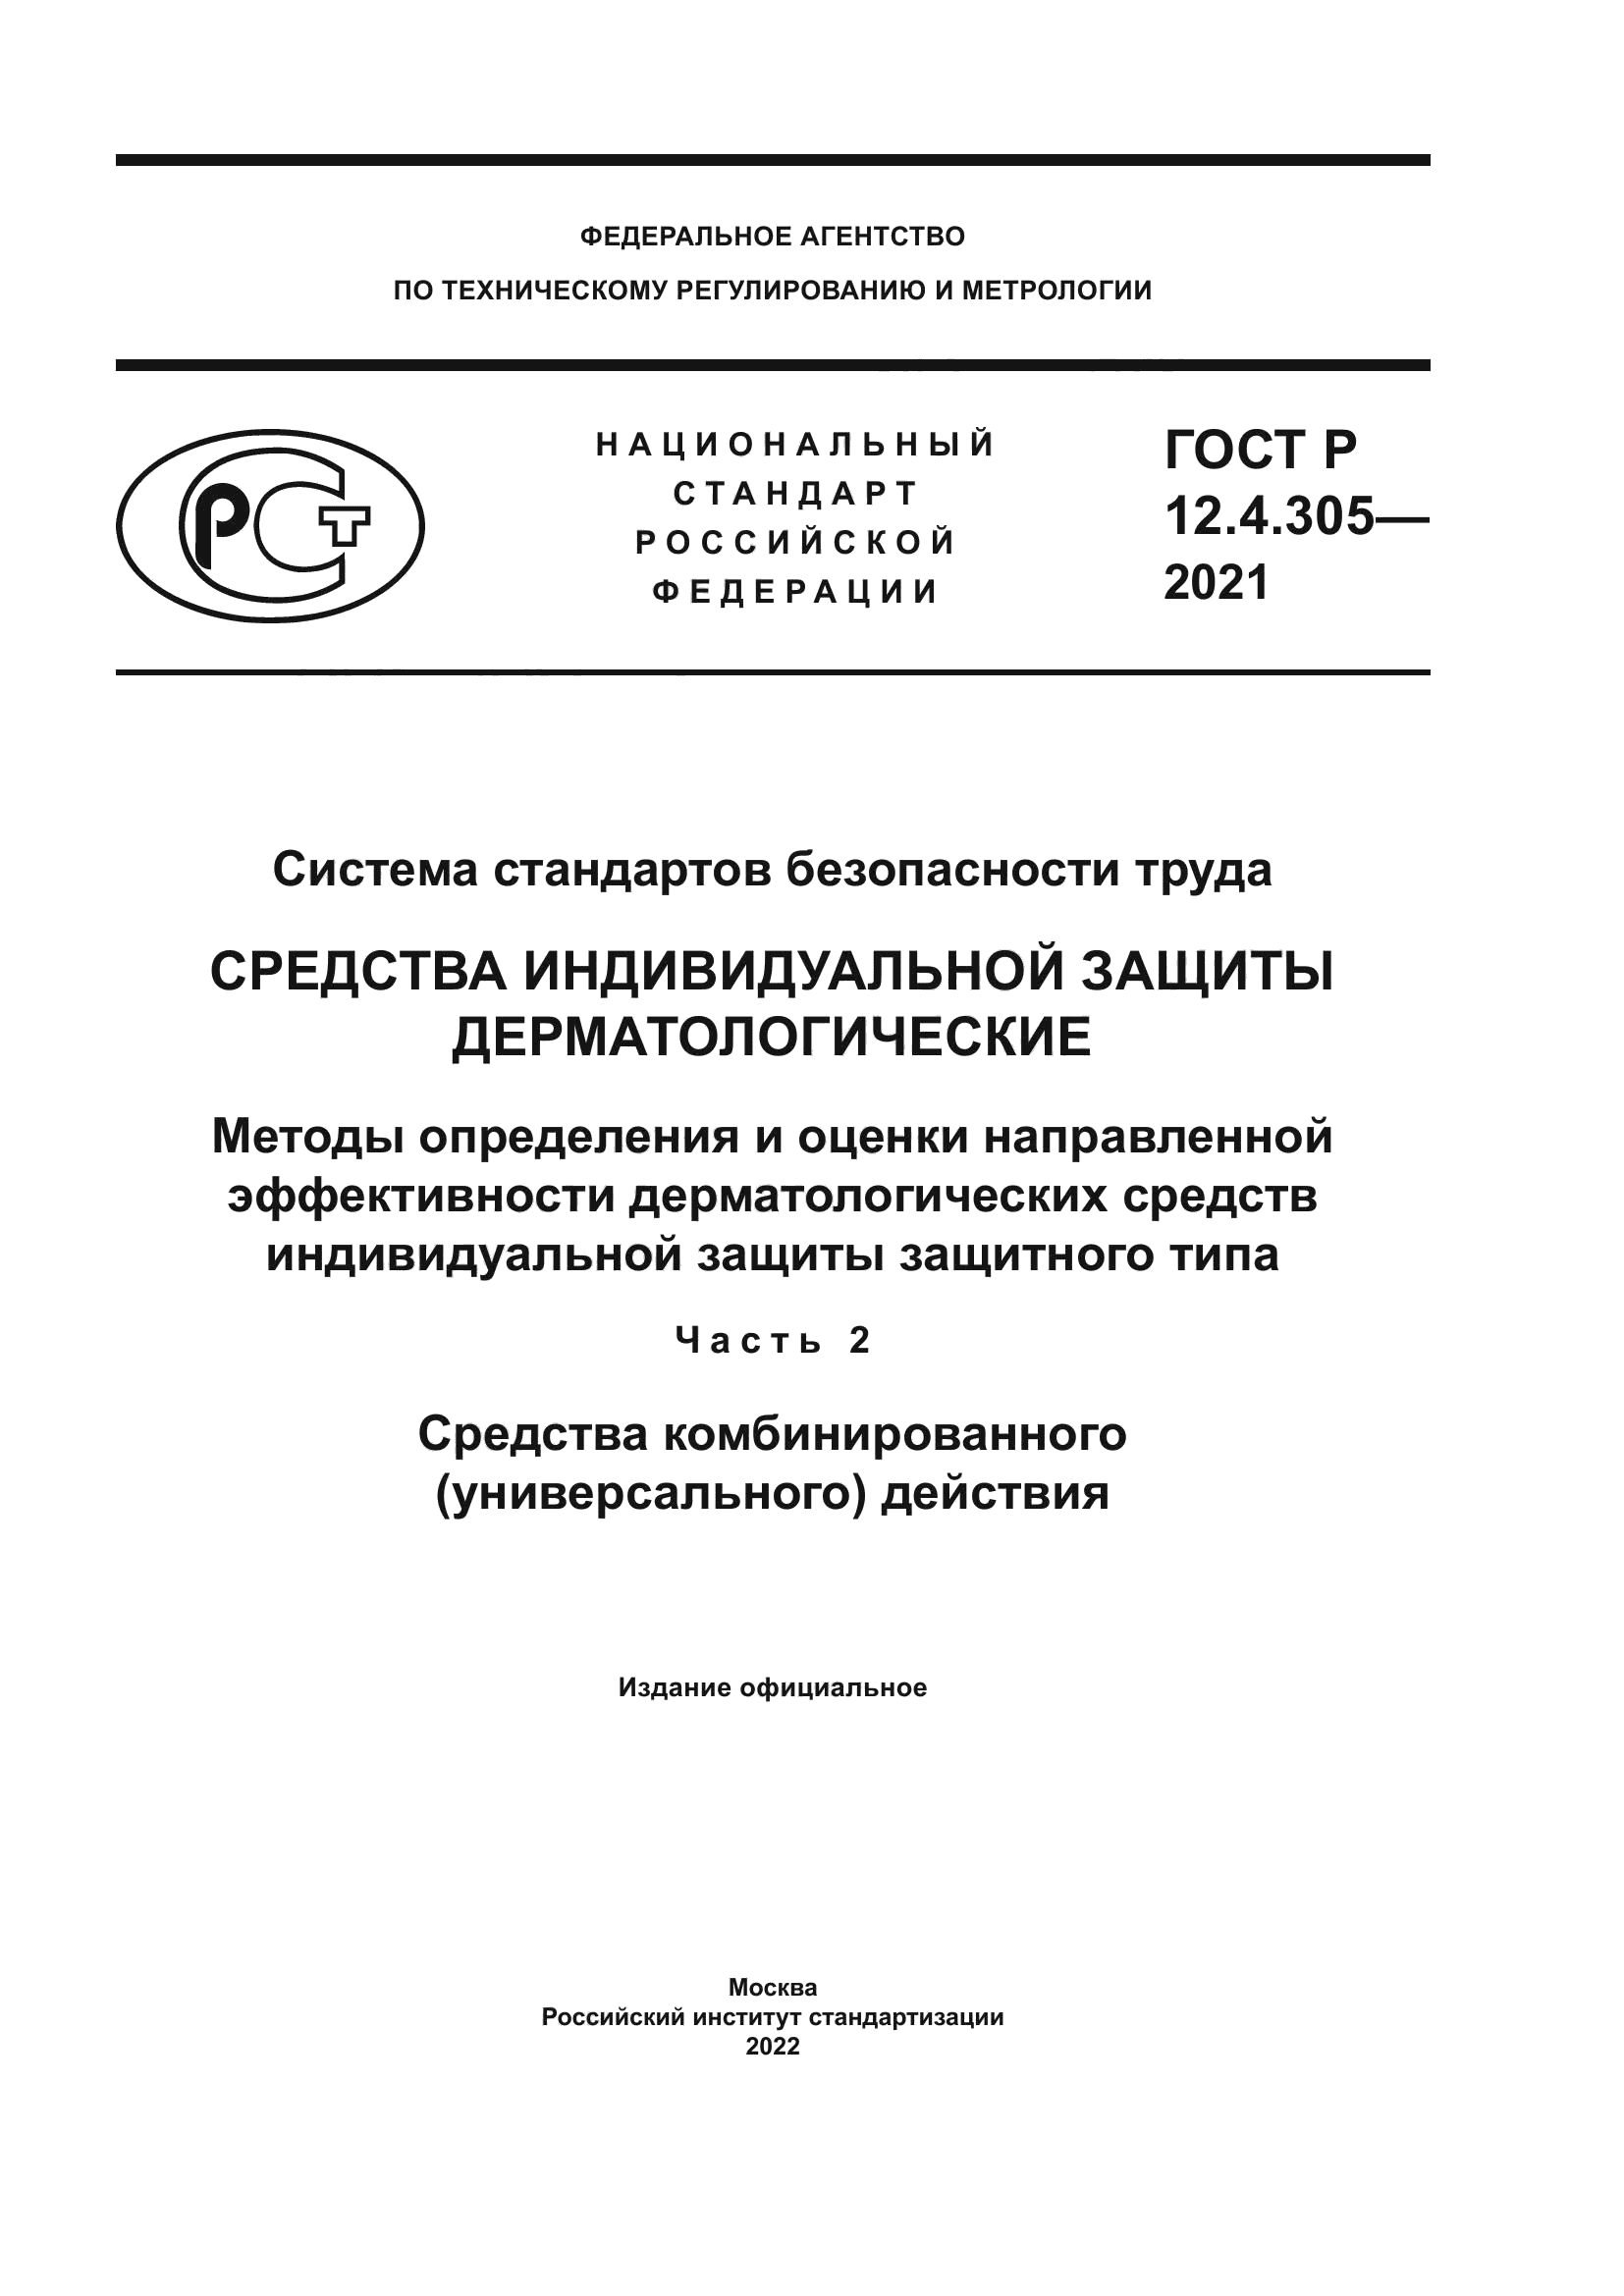 ГОСТ Р 12.4.305-2021